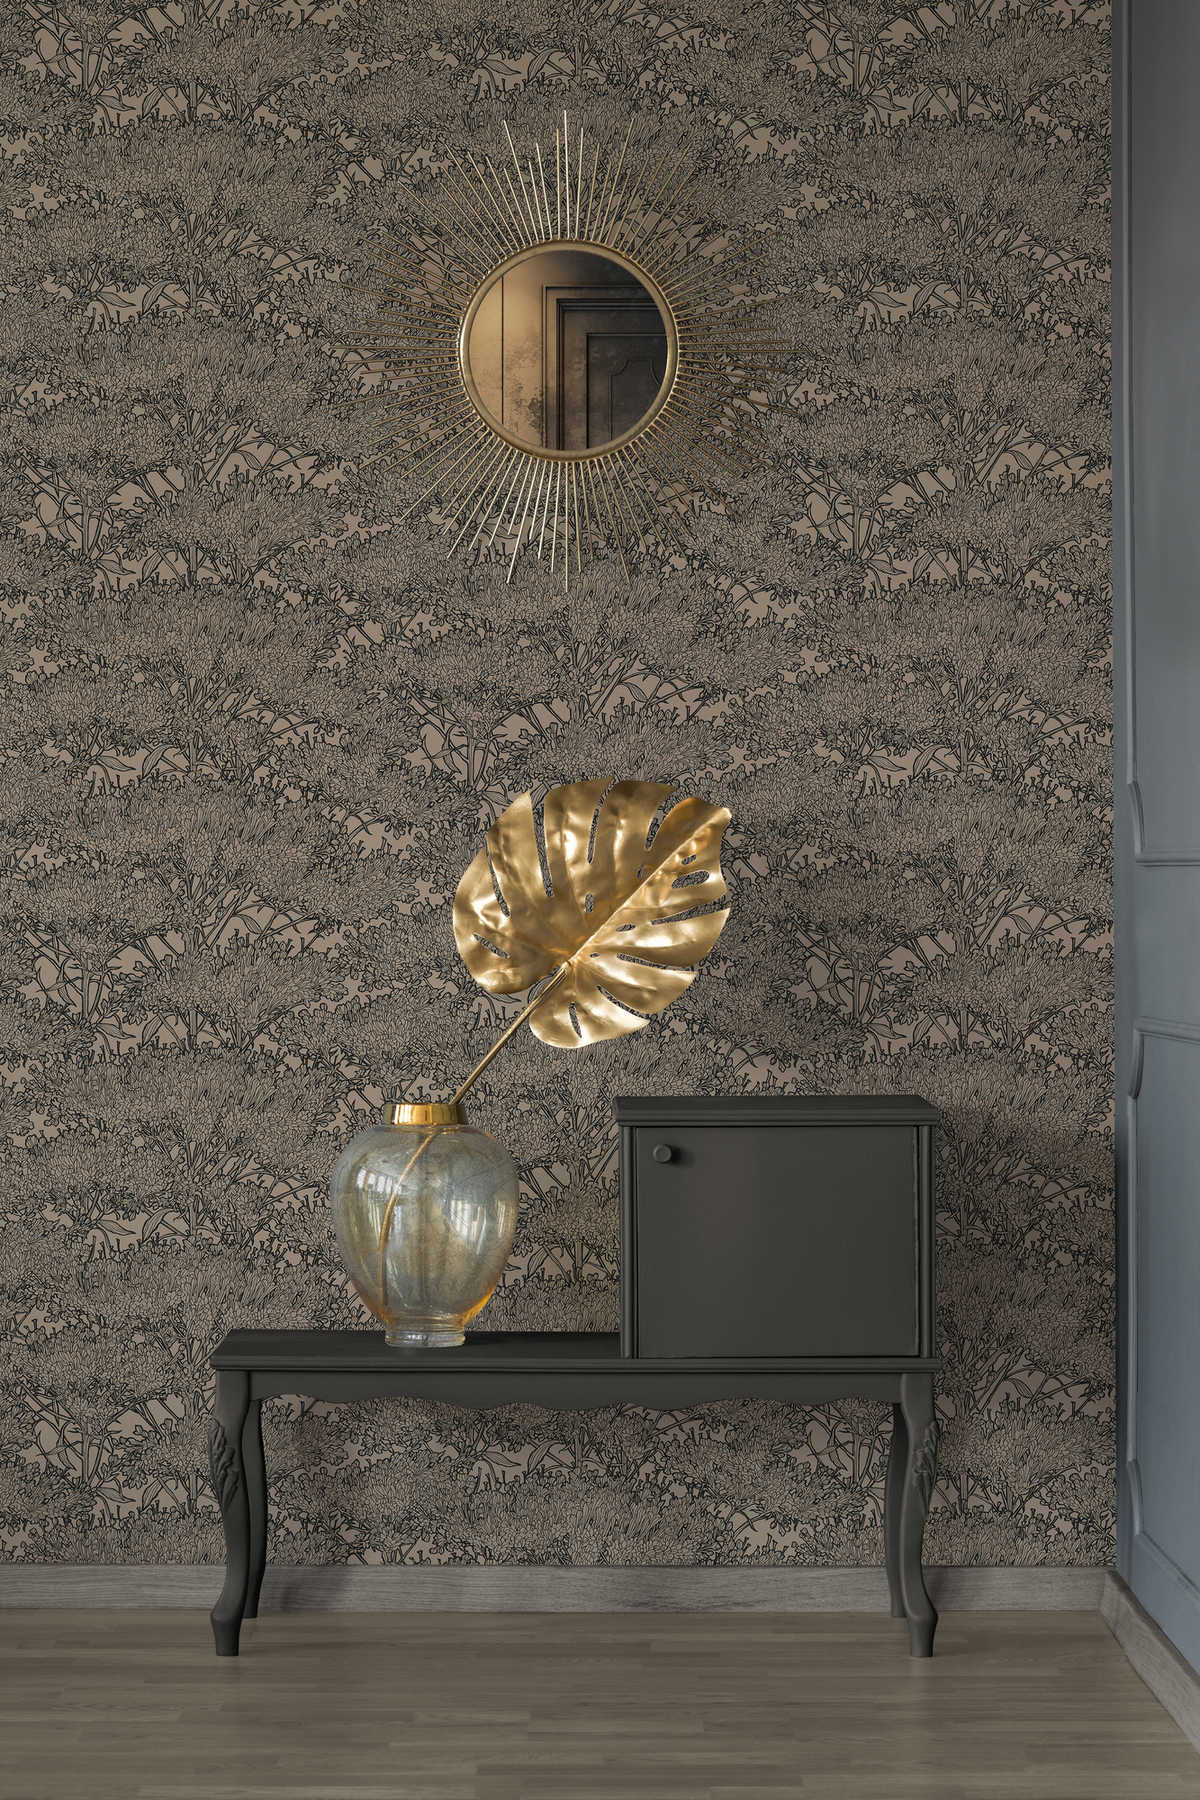             Floral wallpaper in beige with black contours - brown, grey, beige
        